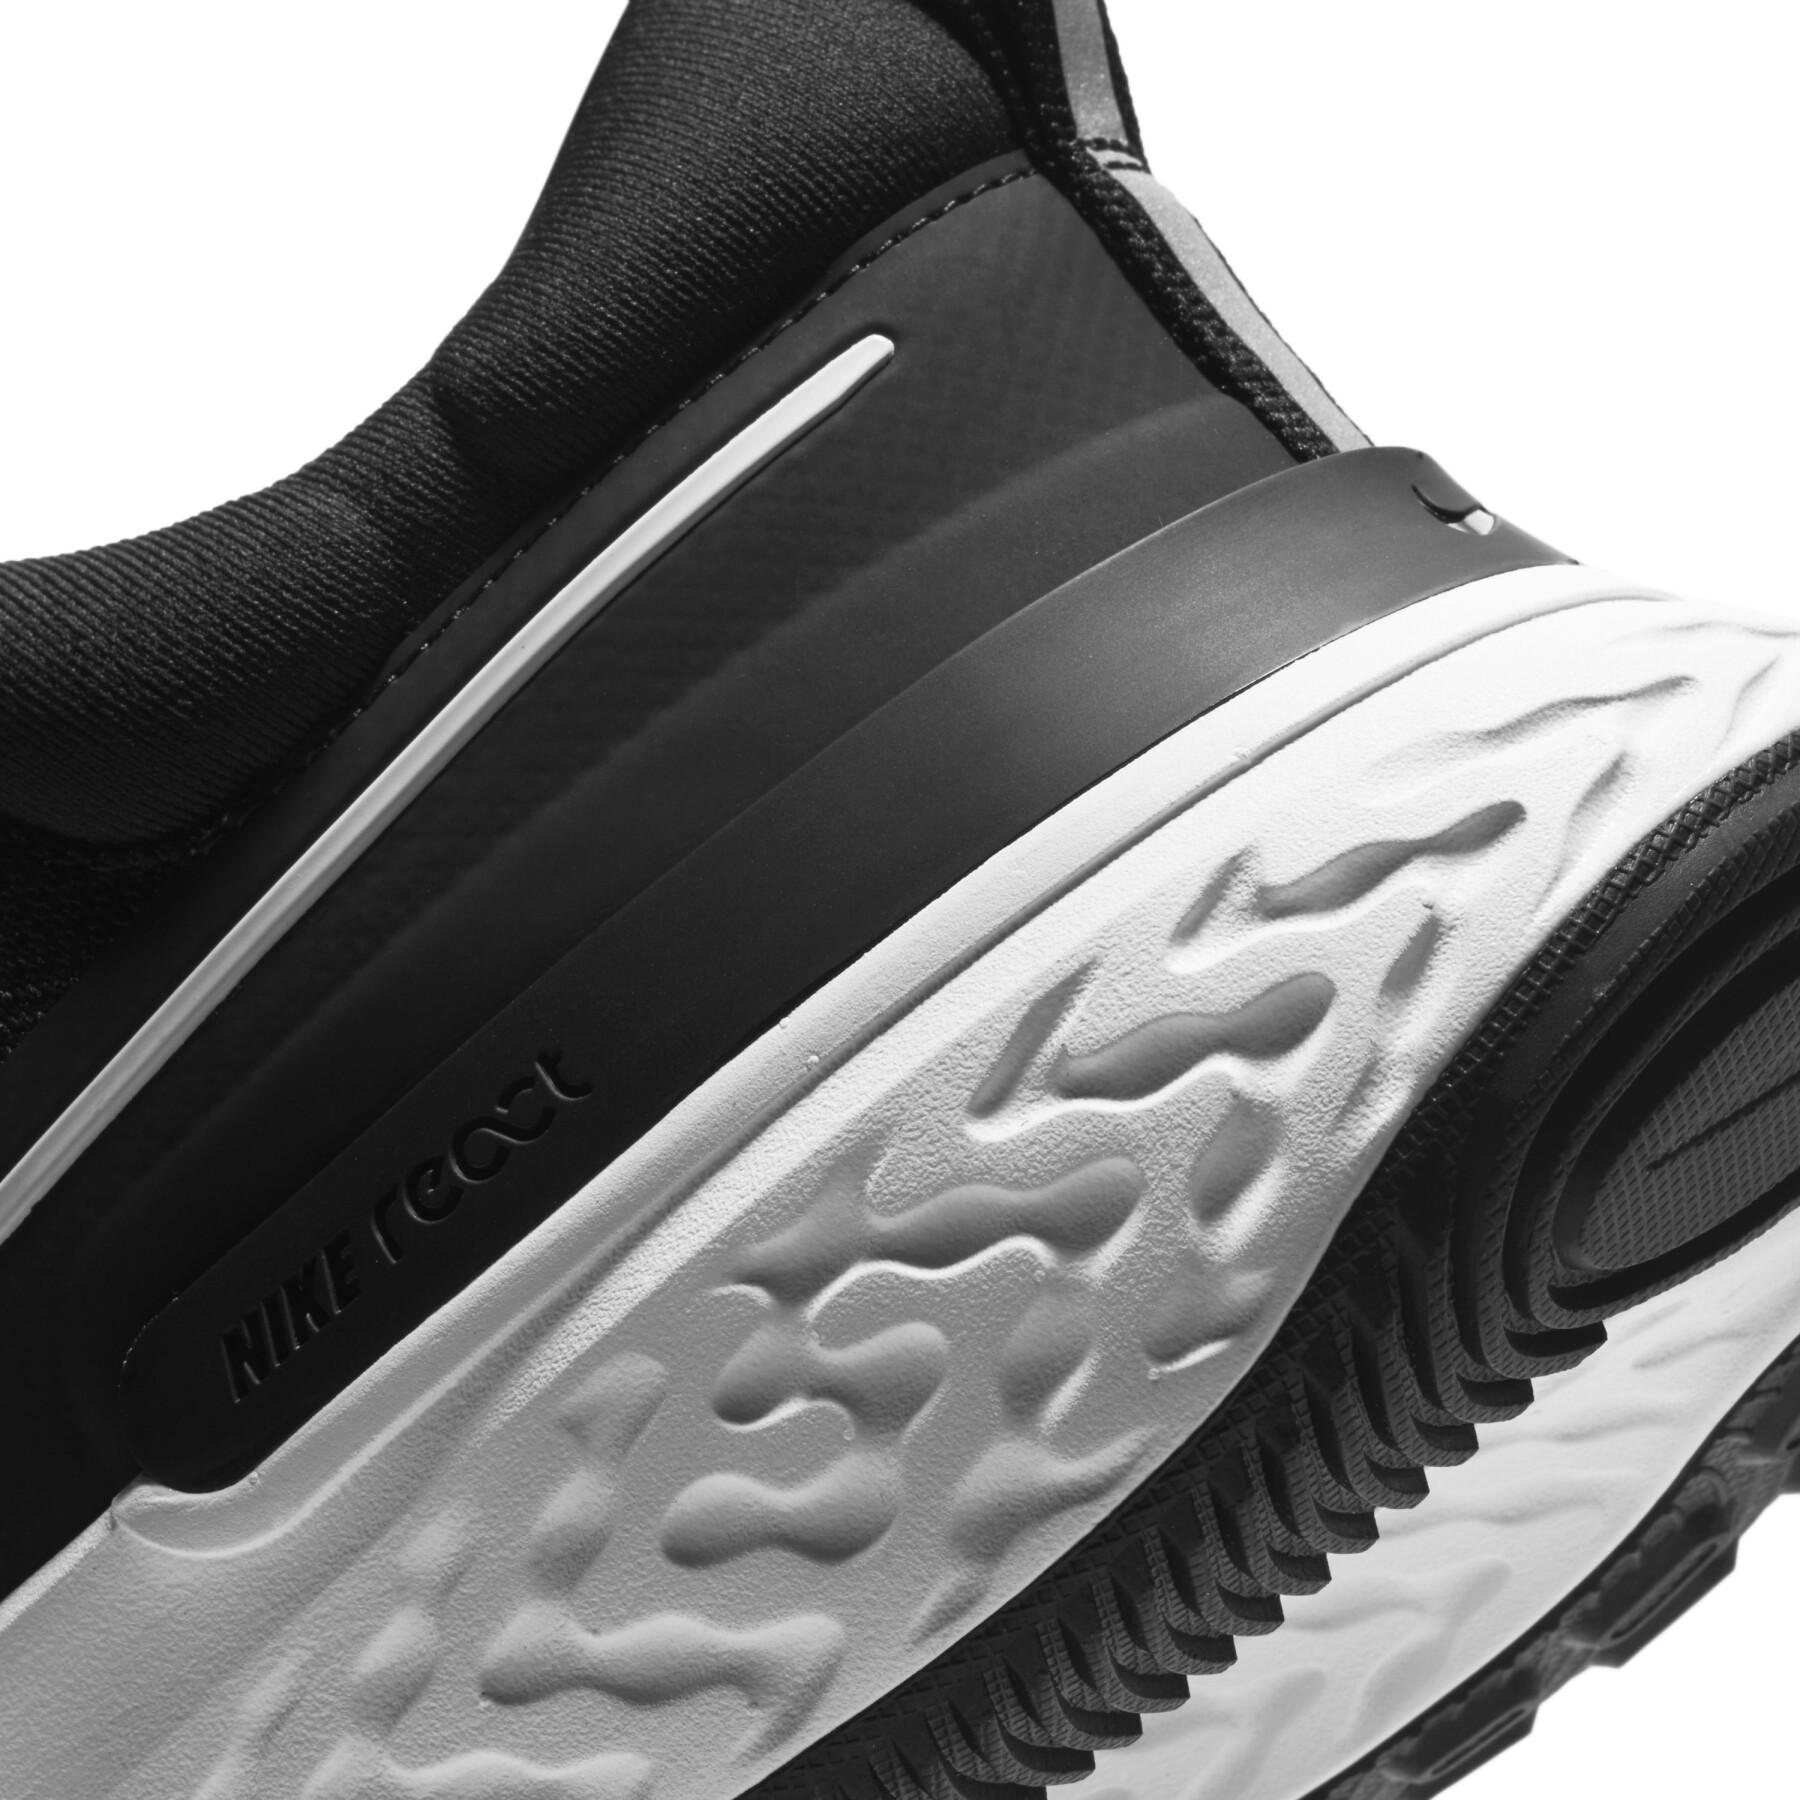 Schuhe Nike React Miler 2